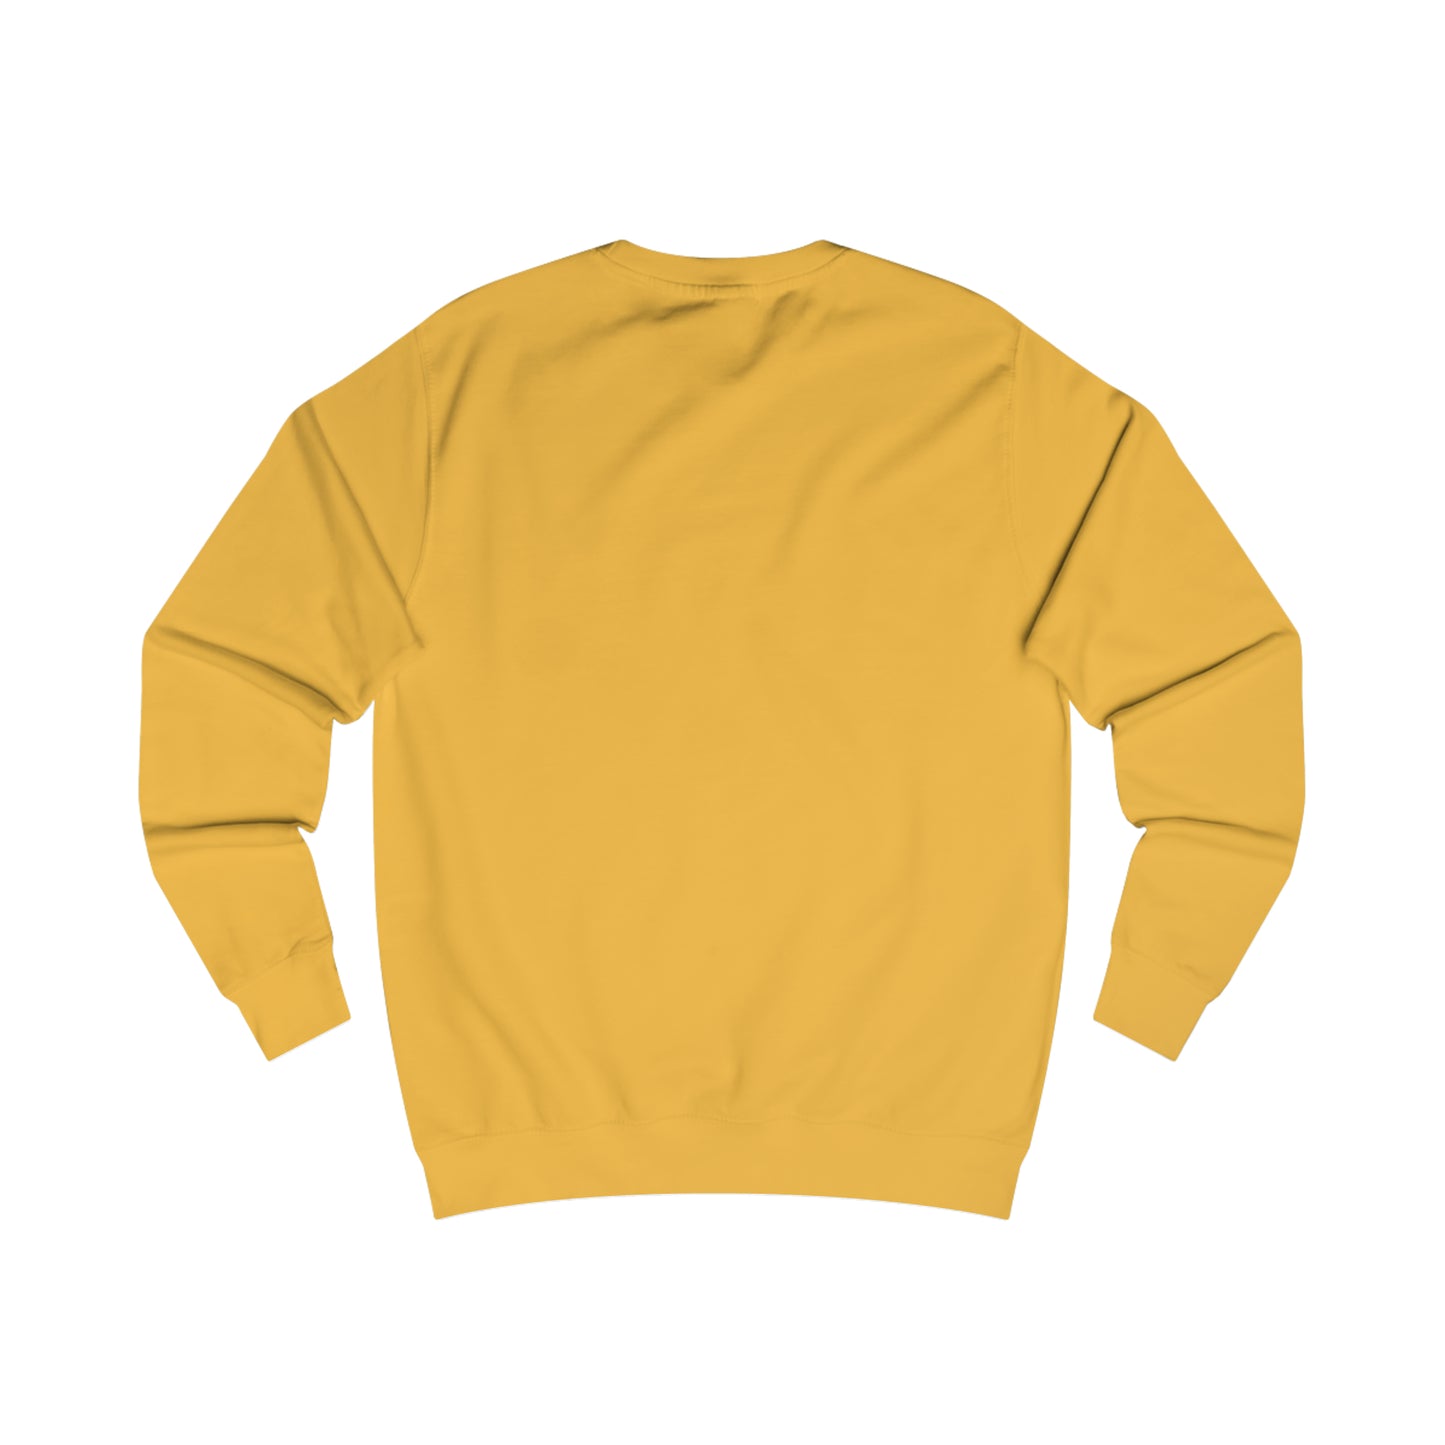 ON A PLAIN // Crewneck Sweatshirt